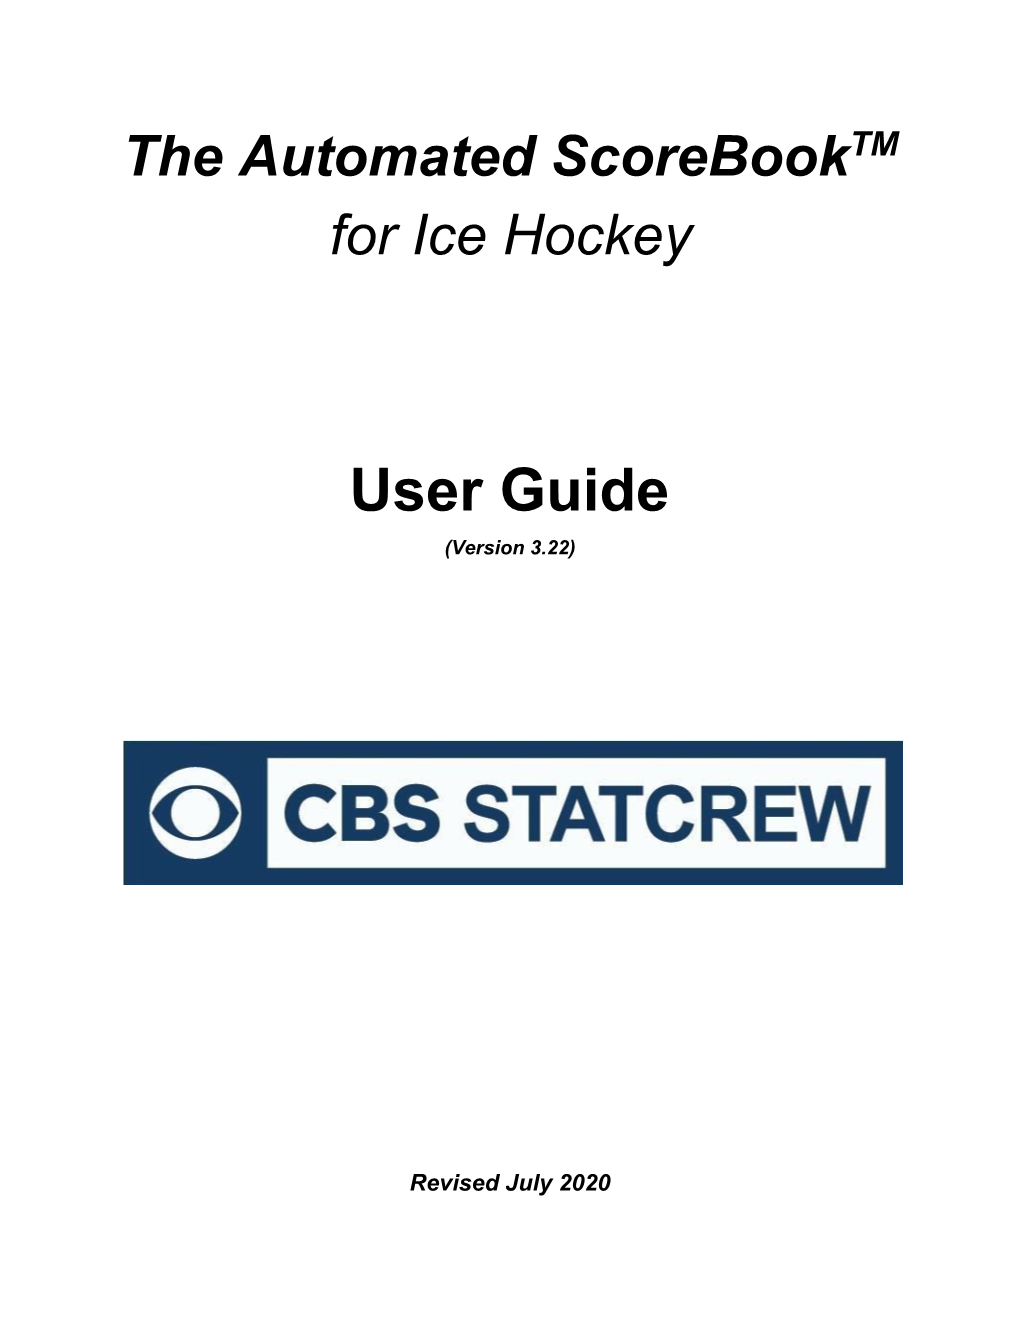 The Automated Scorebook​TM for Ice Hockey